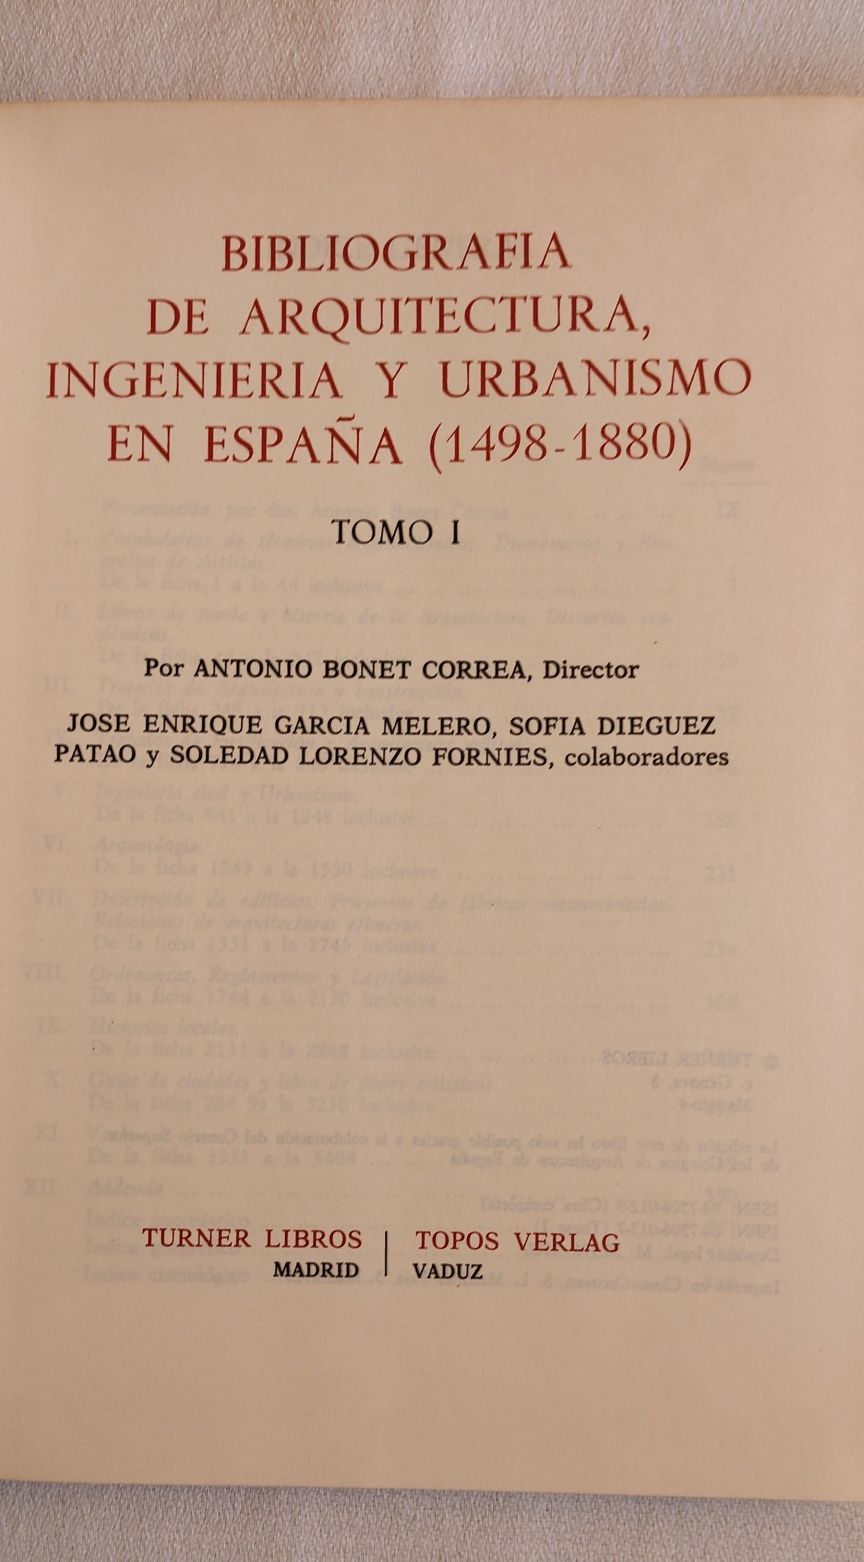 Bibliografia de Arquitetura, Ingenieria y Urbanismo en Espana